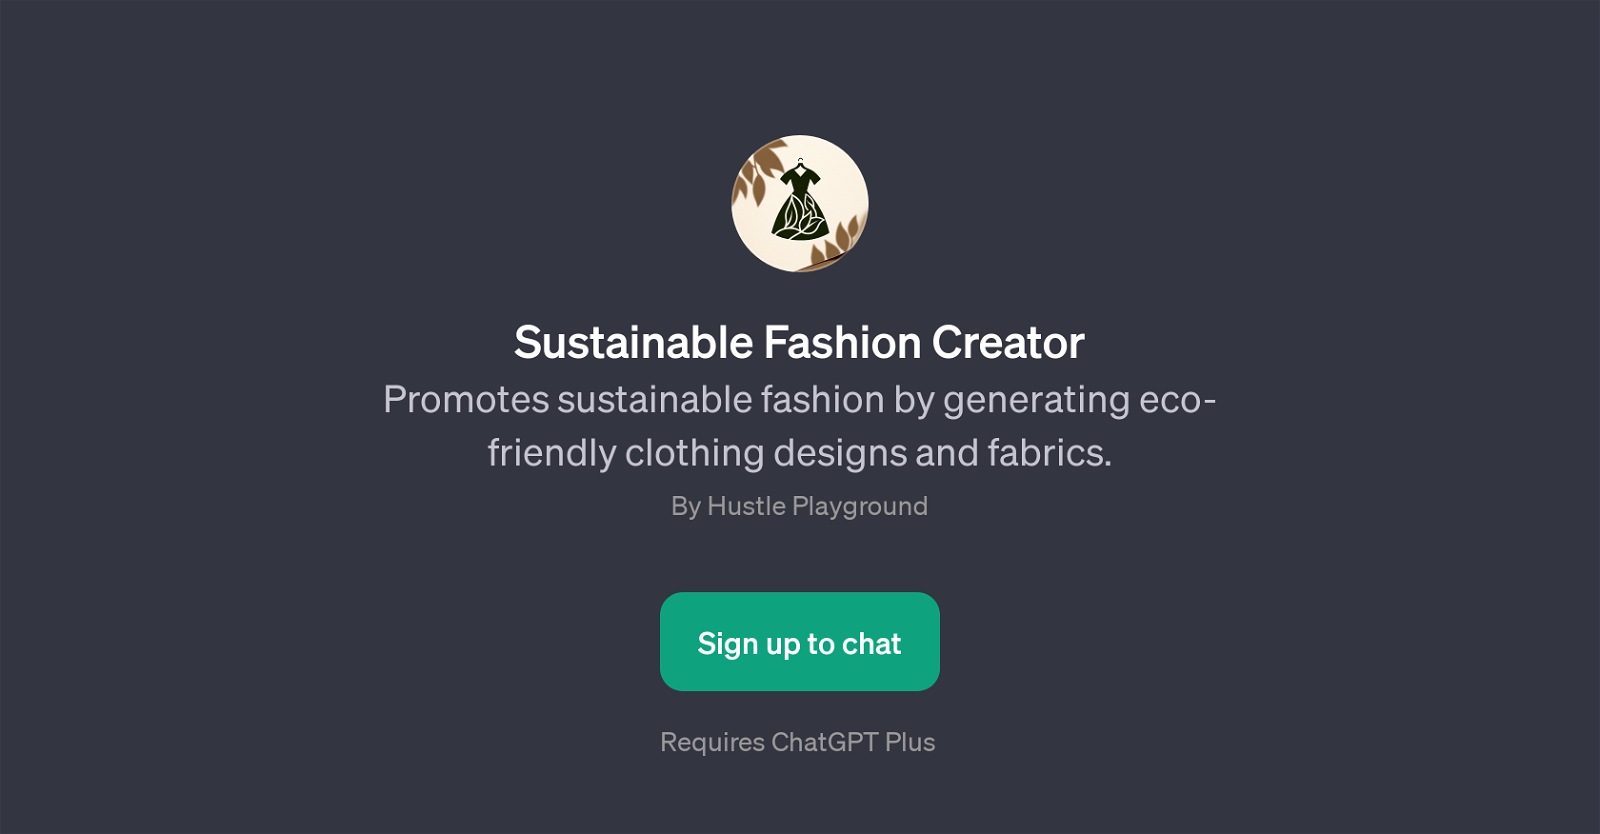 Sustainable Fashion Creator website